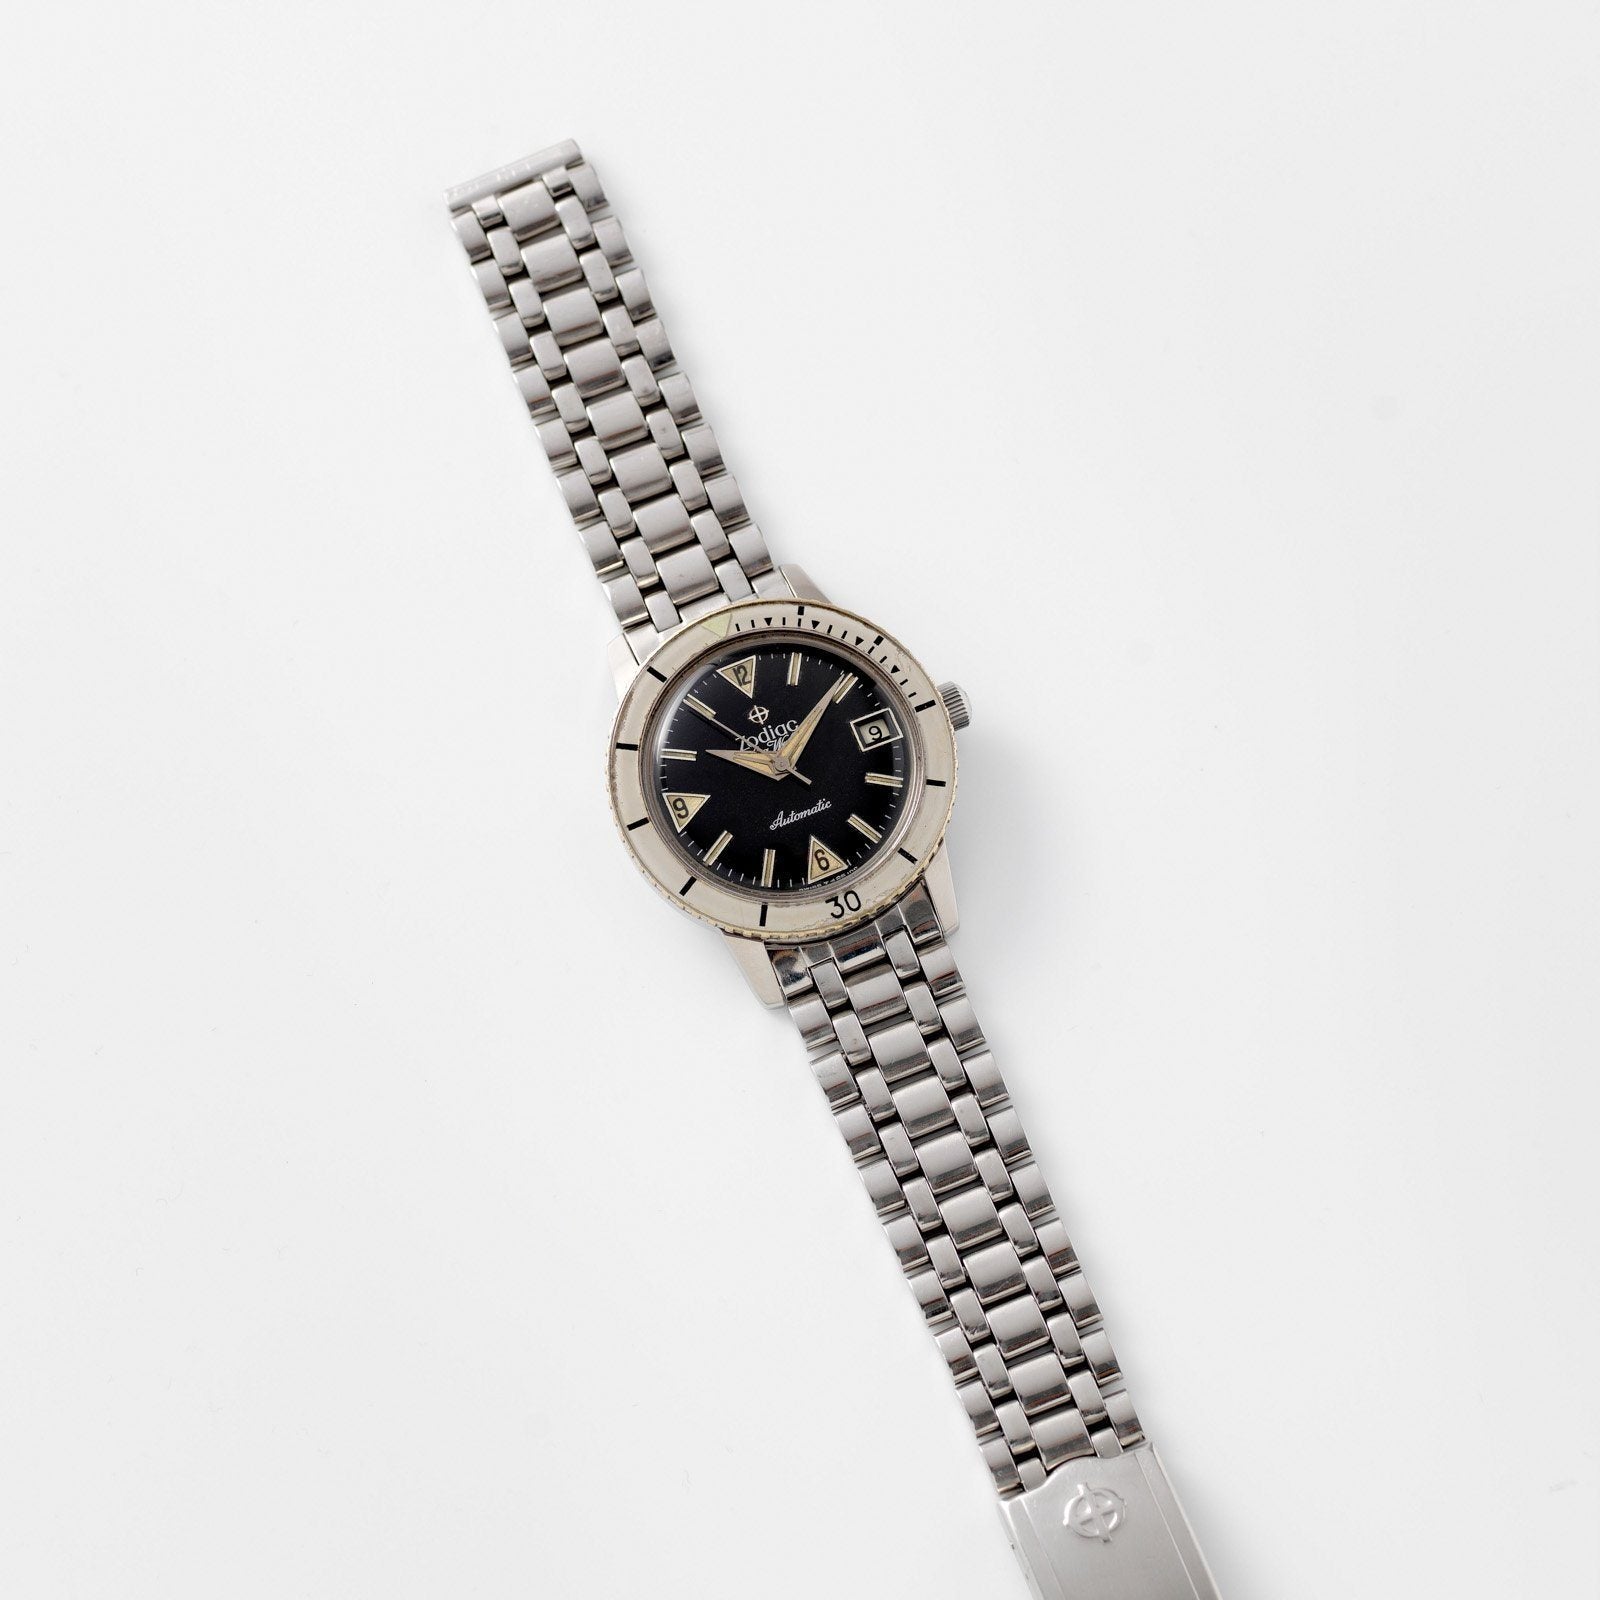 Zodiac Sea Wolf Gilt Dial with Original Bracelet